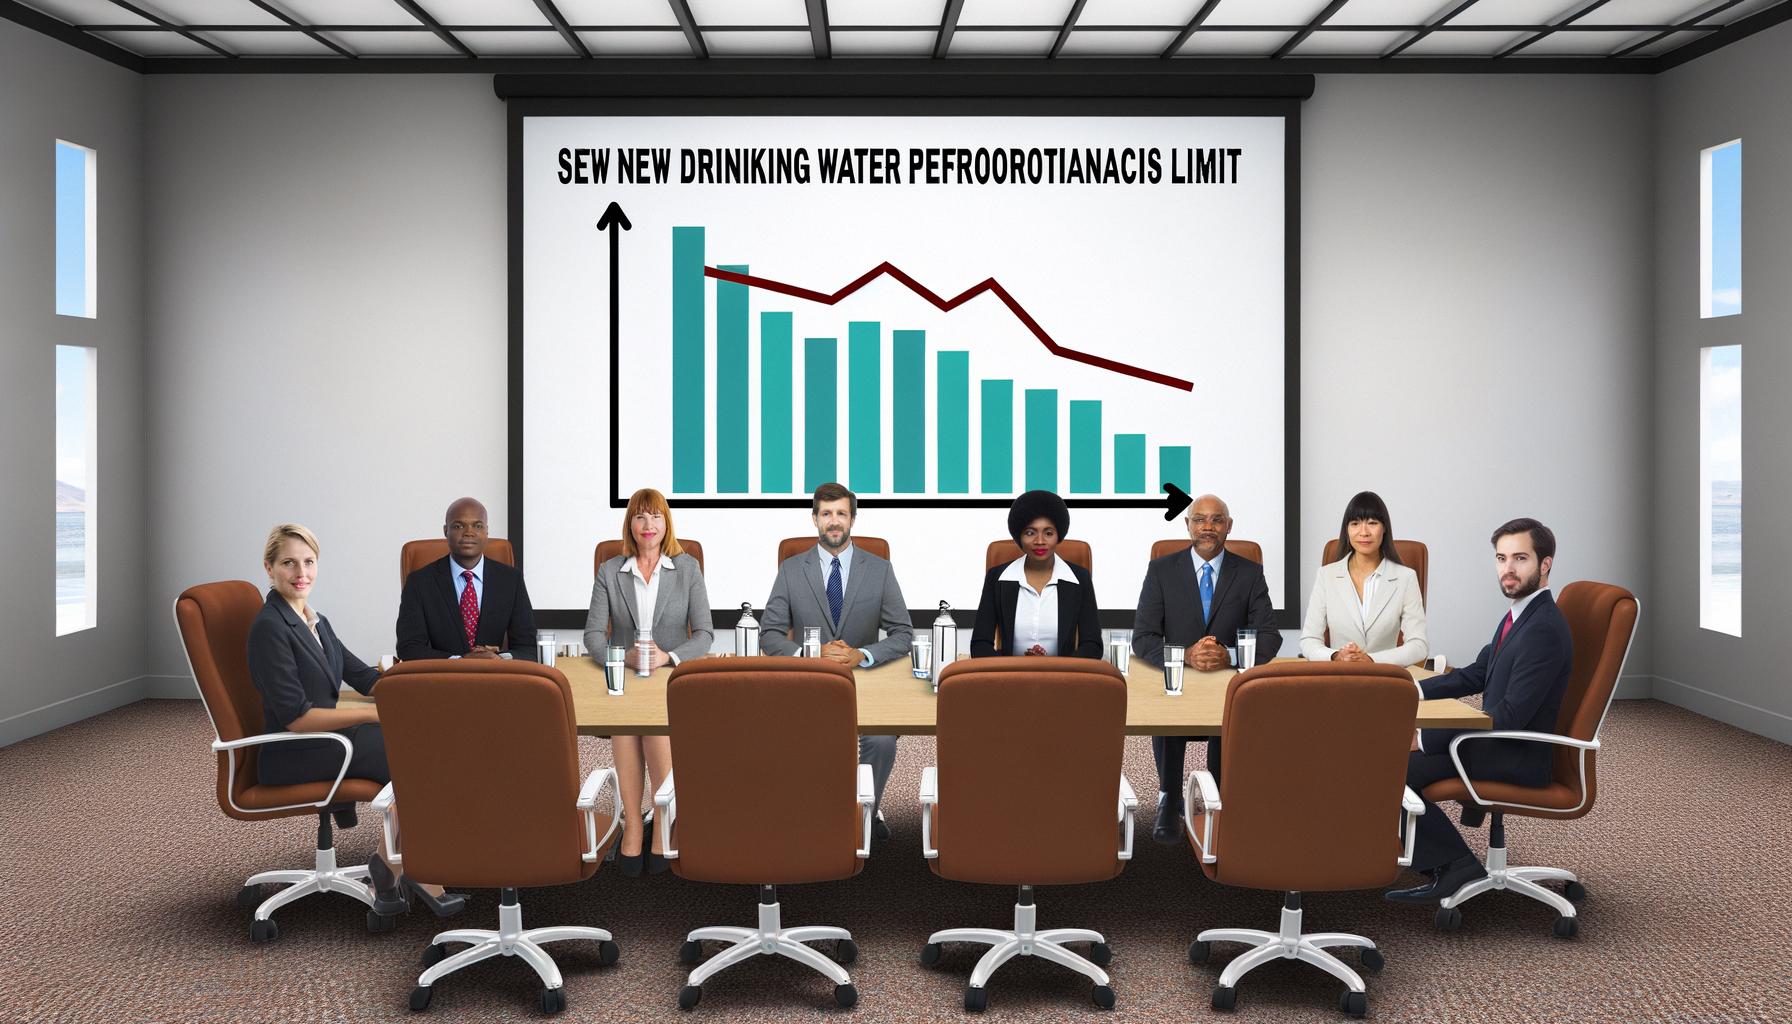 EPA rules target nearly zero PFAS in drinking water.